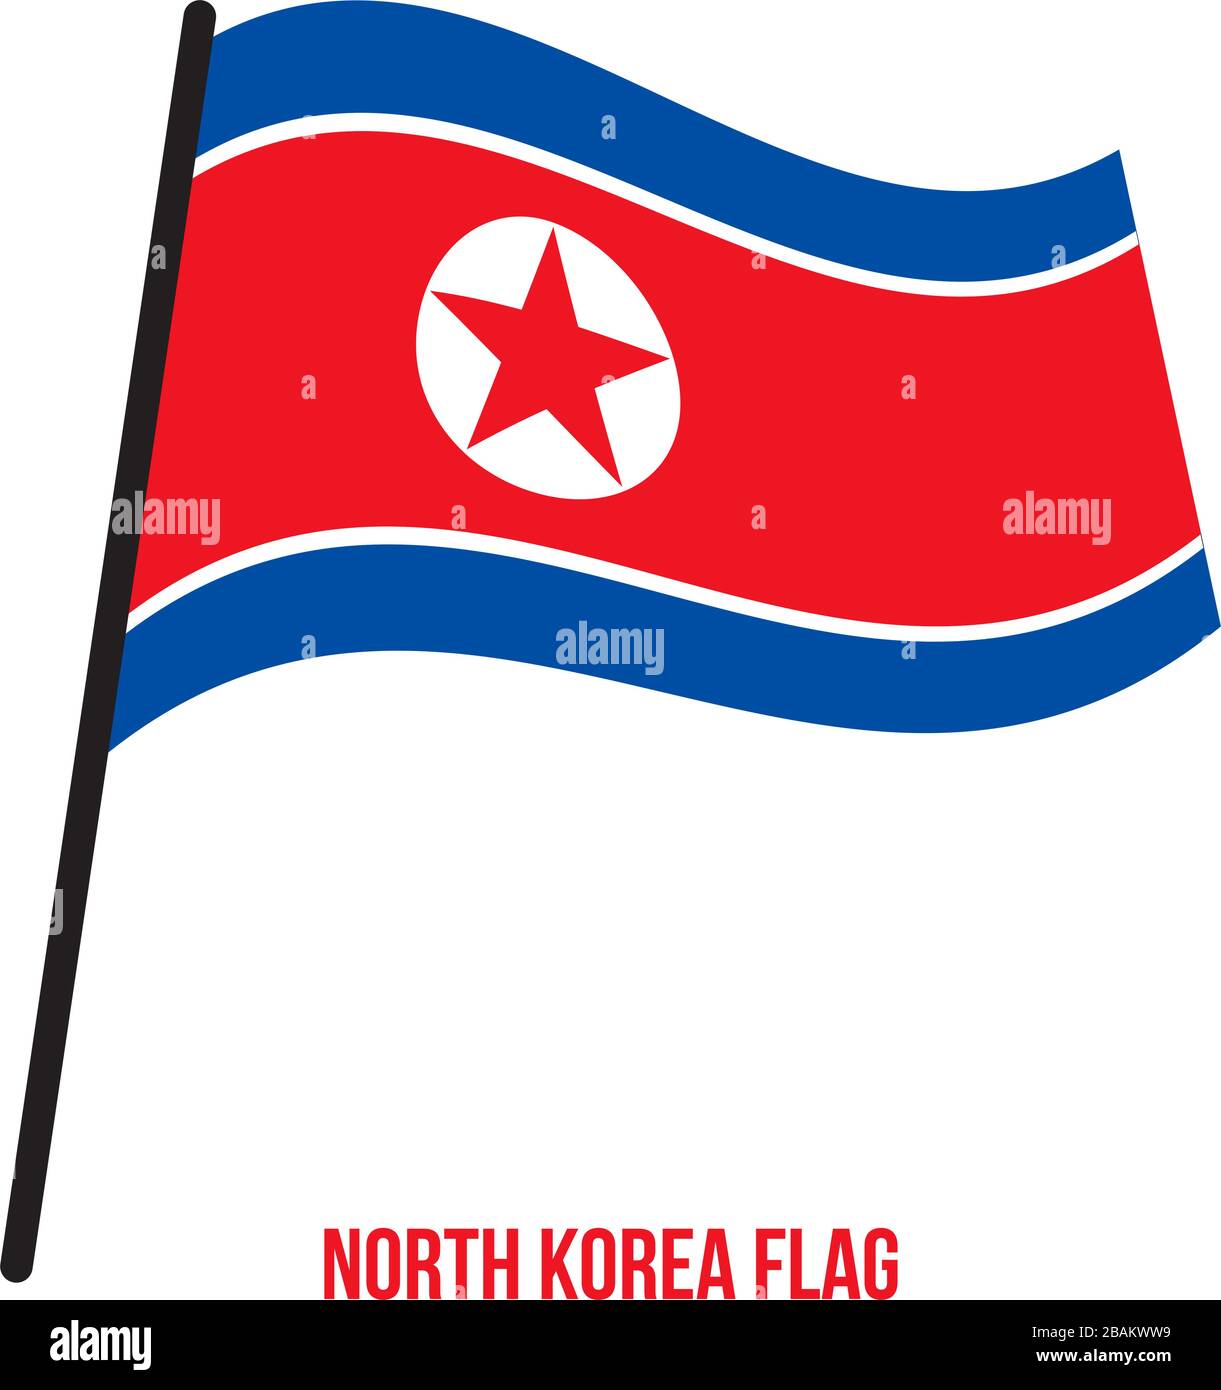 North Korea Flag Waving Vector Illustration on White Background. North Korea National Flag. Stock Vector